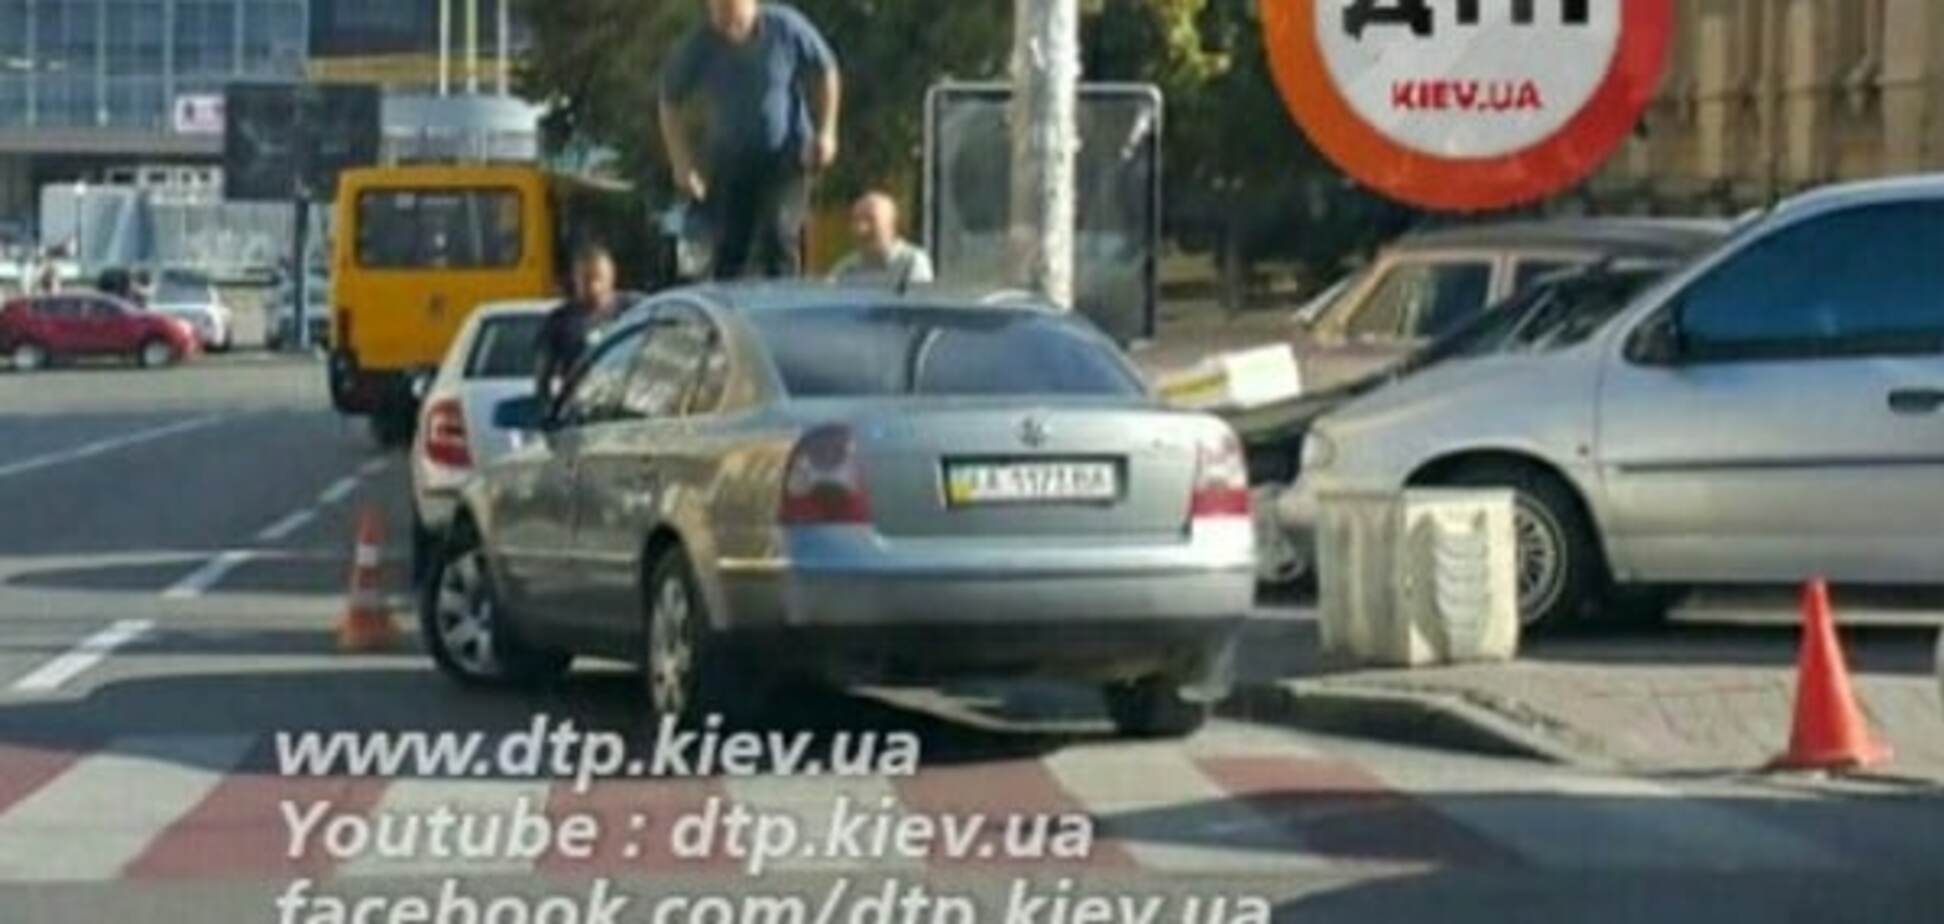 Разборки на дороге: в Киеве авто героя парковки помяли ногами